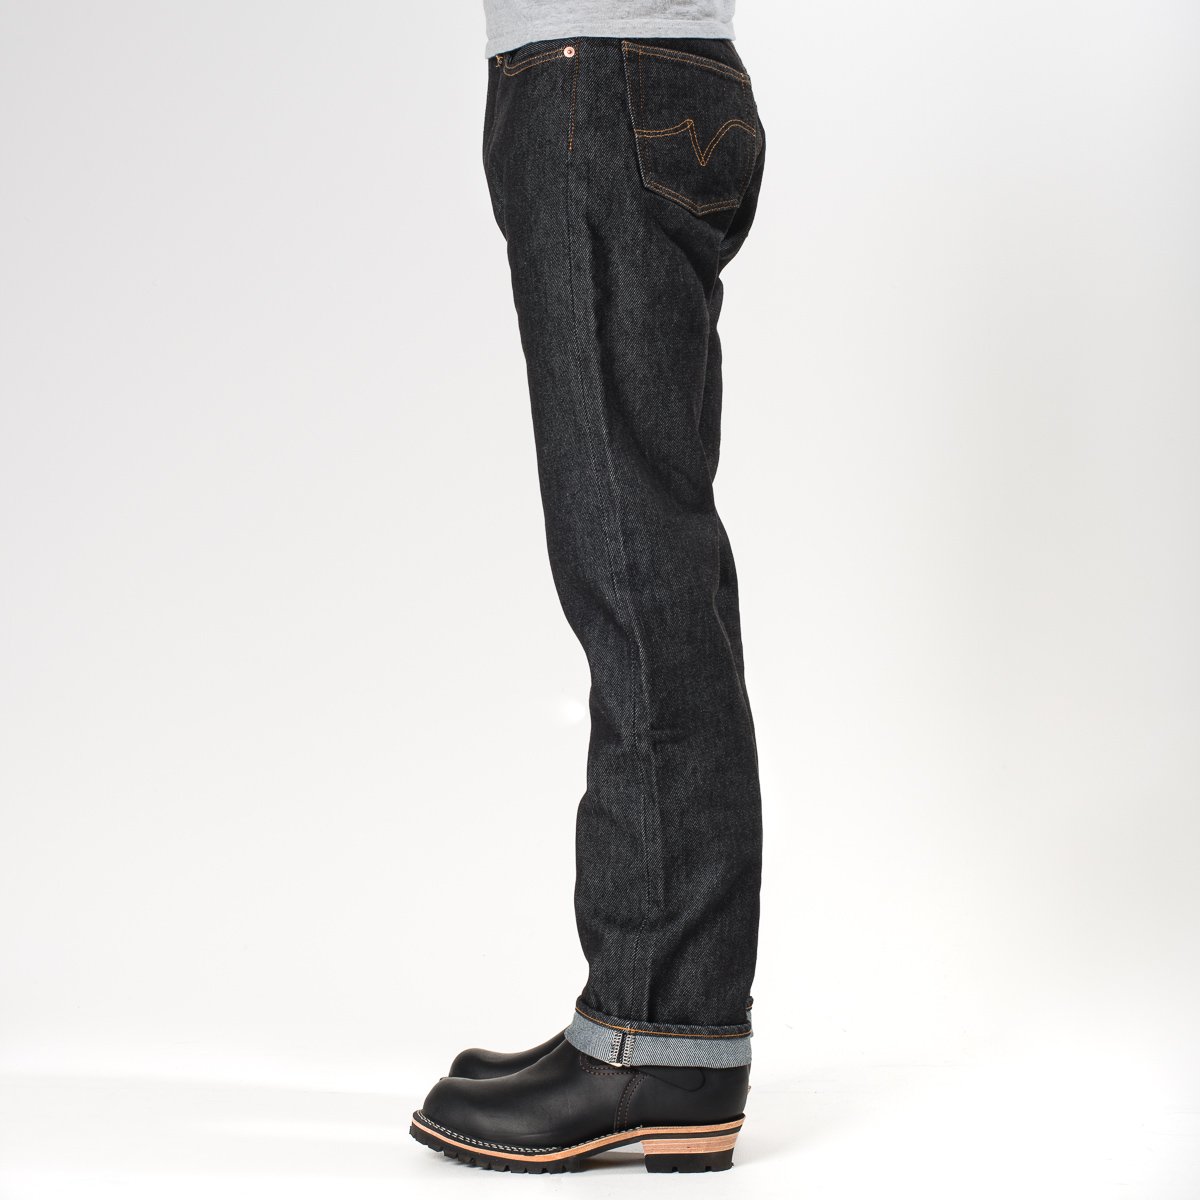 black selvedge jeans